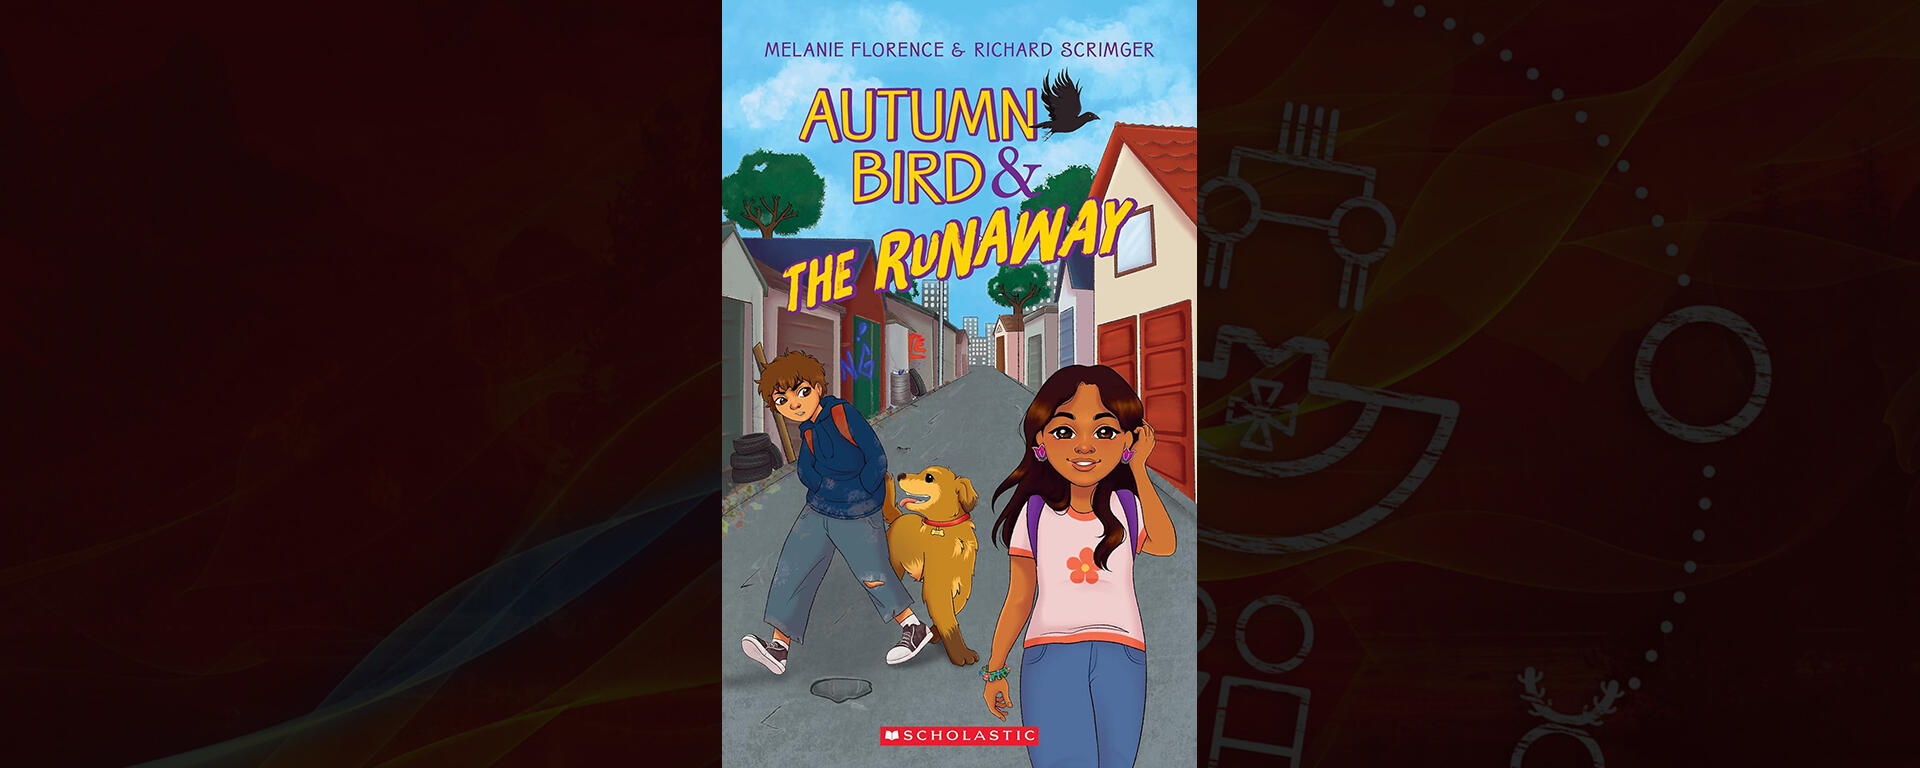 Autumn Bird & the Runaway